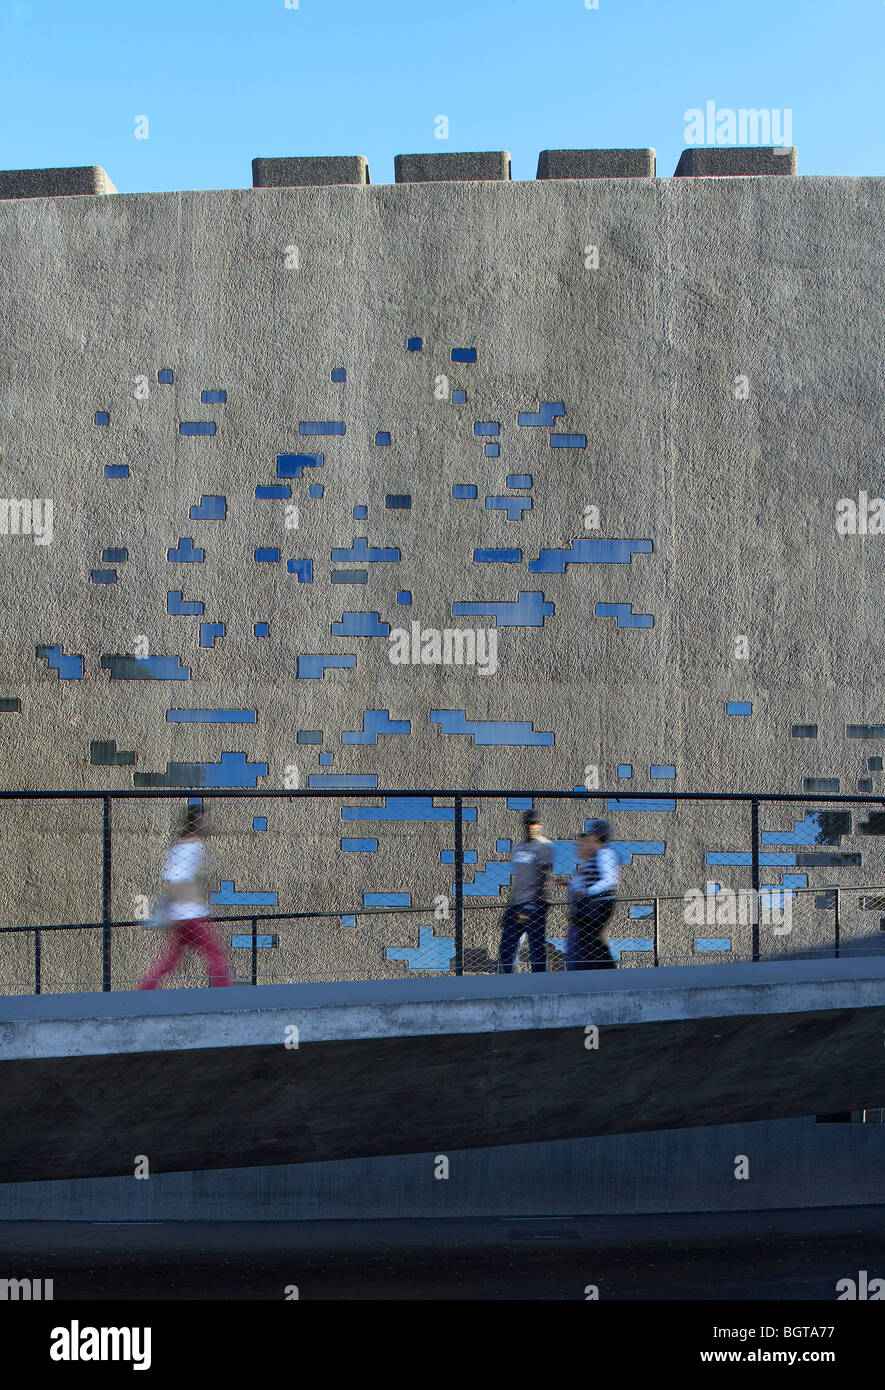 tea tenerife espacio de las artes, view of people with the feature concrete wall as a backdrop Stock Photo